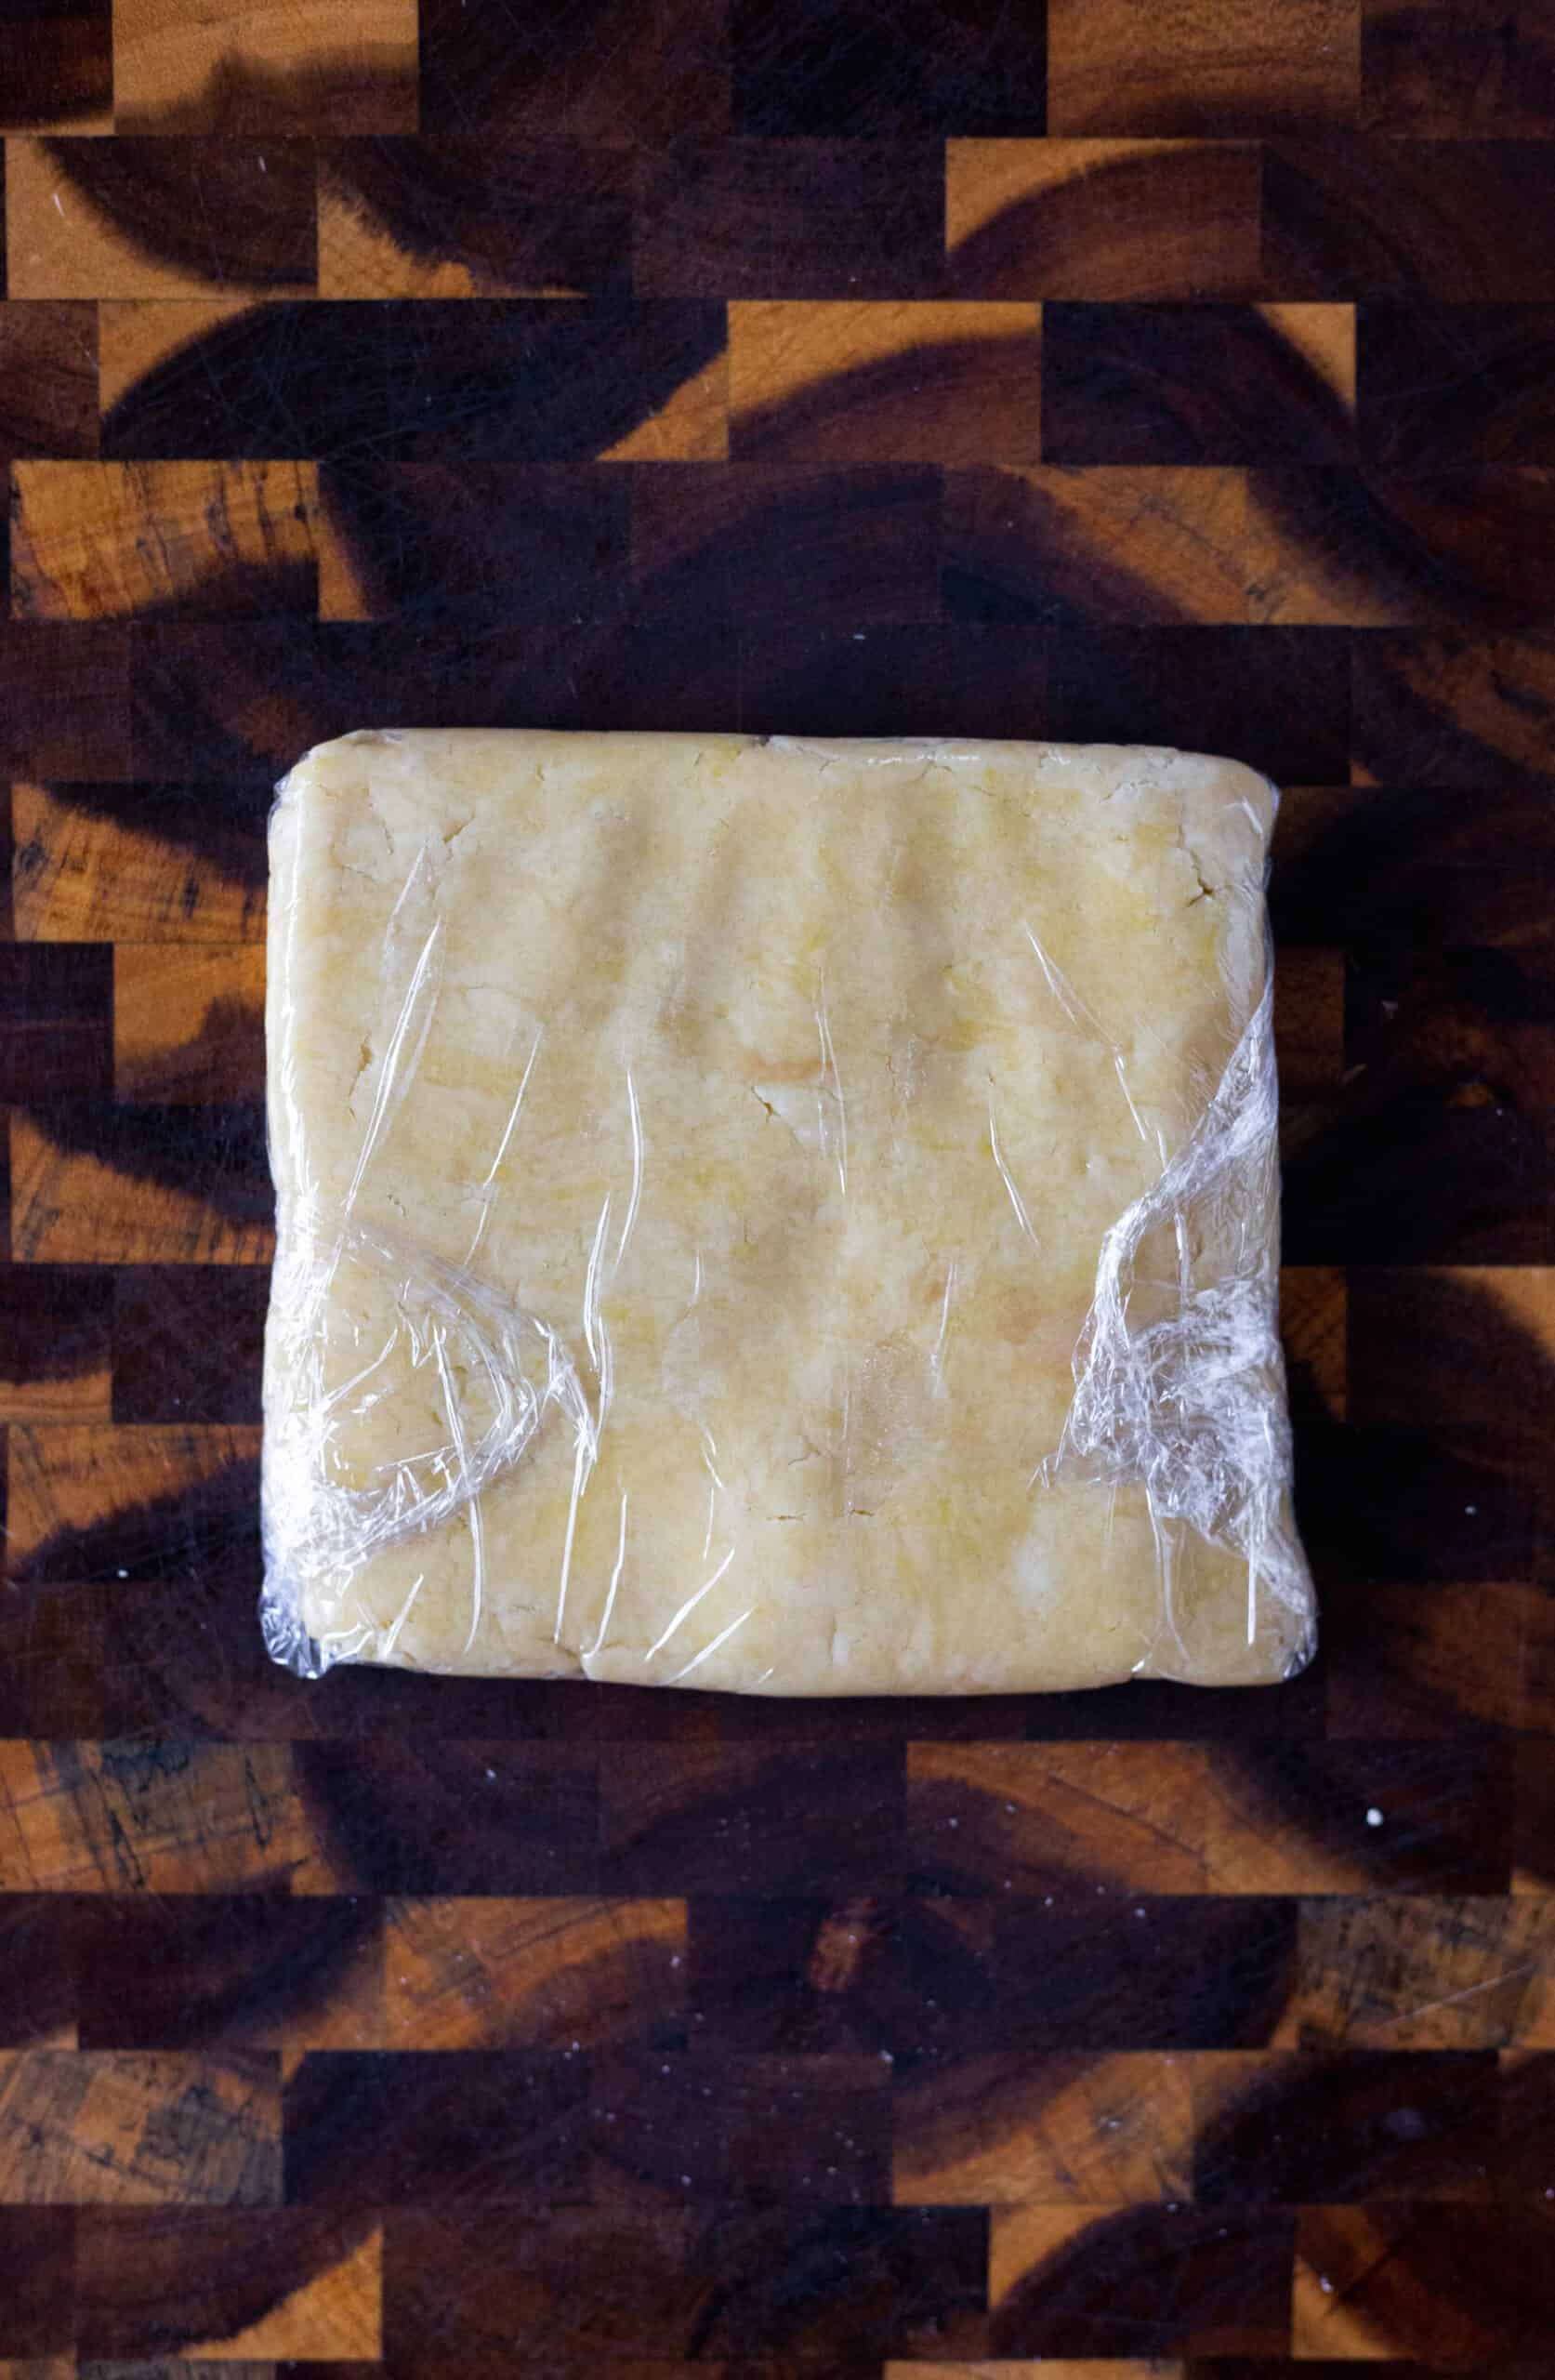 Shortbread crust dough wrapped in plastic wrap